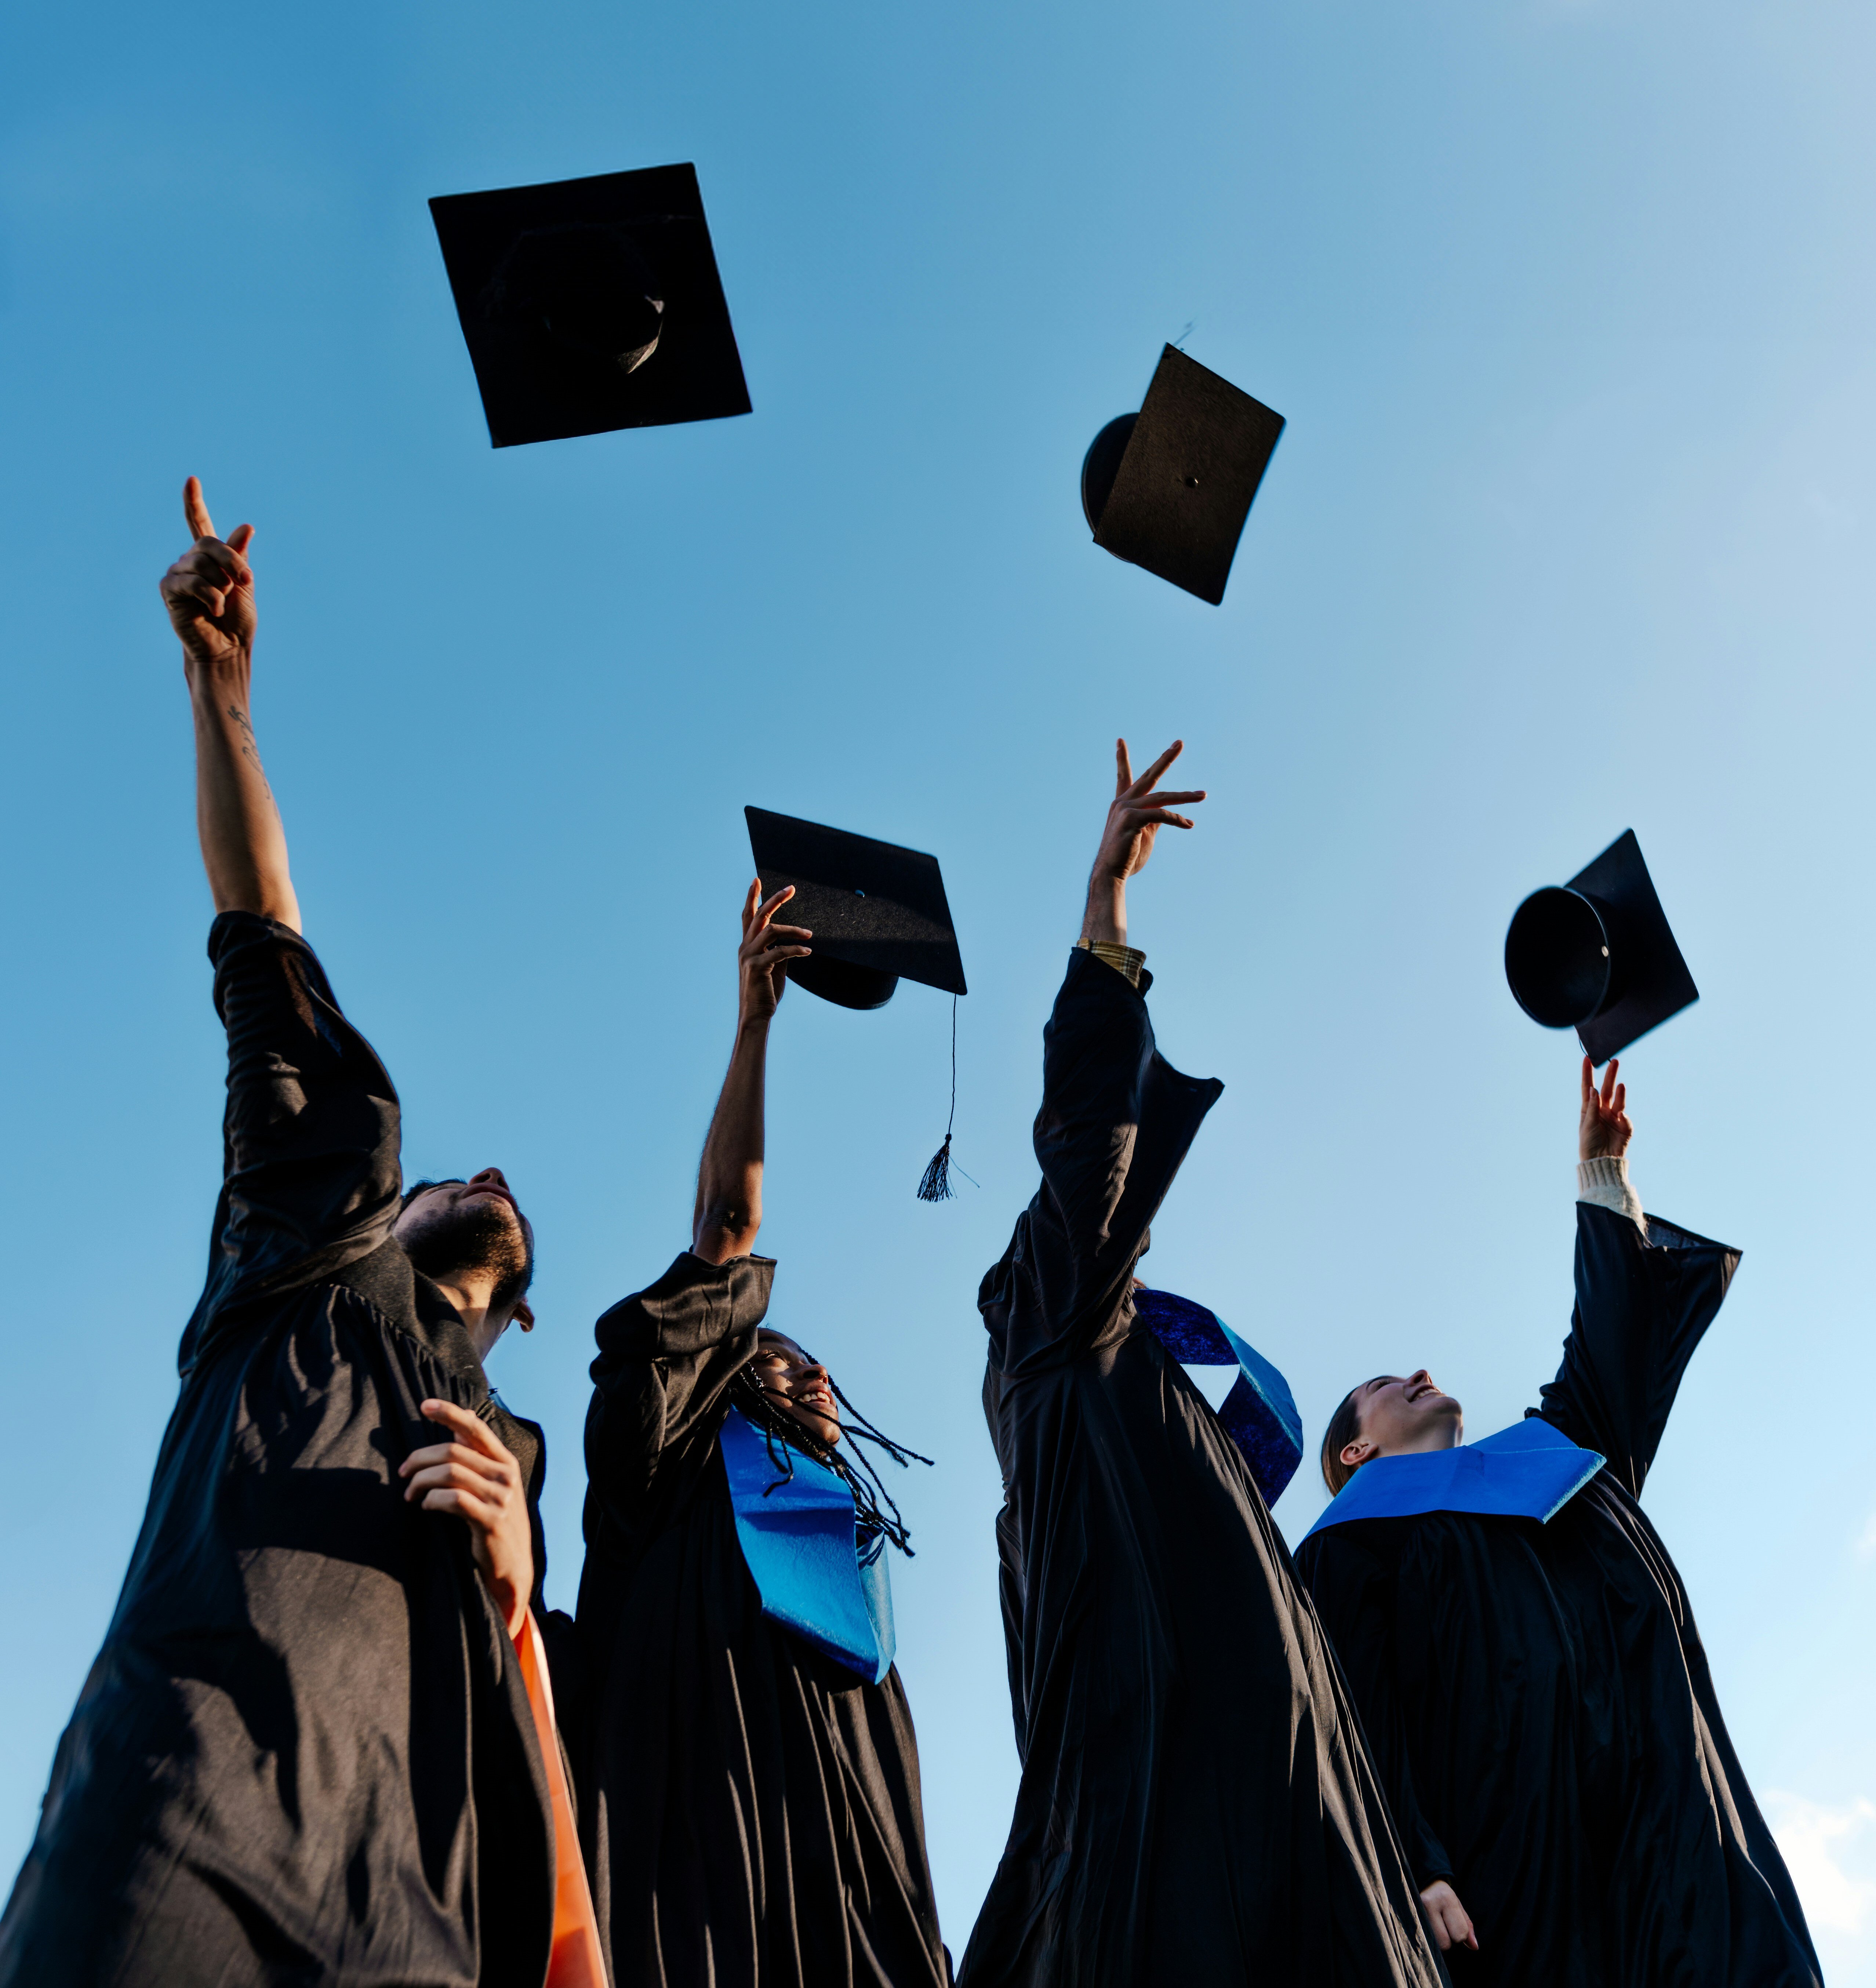 Graduates throw their caps in celebration